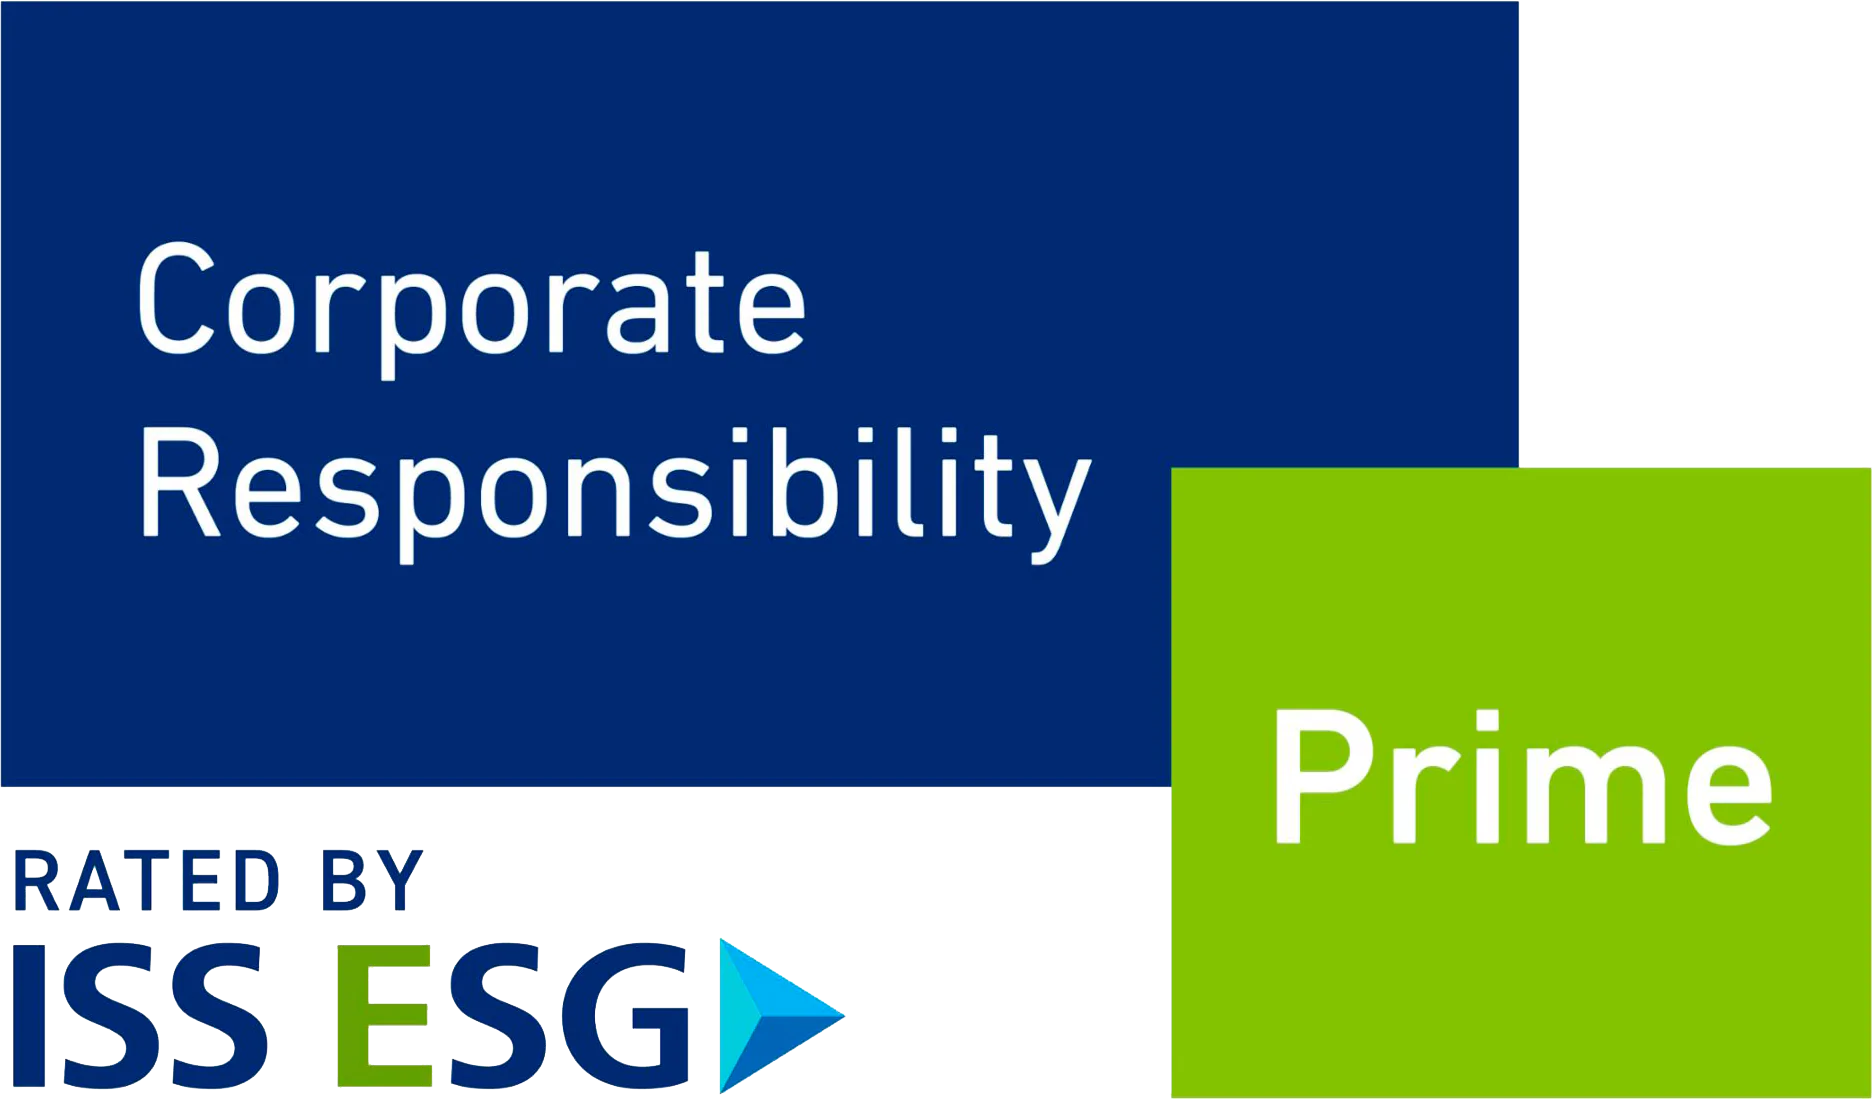 Corporate Responsibility Prime